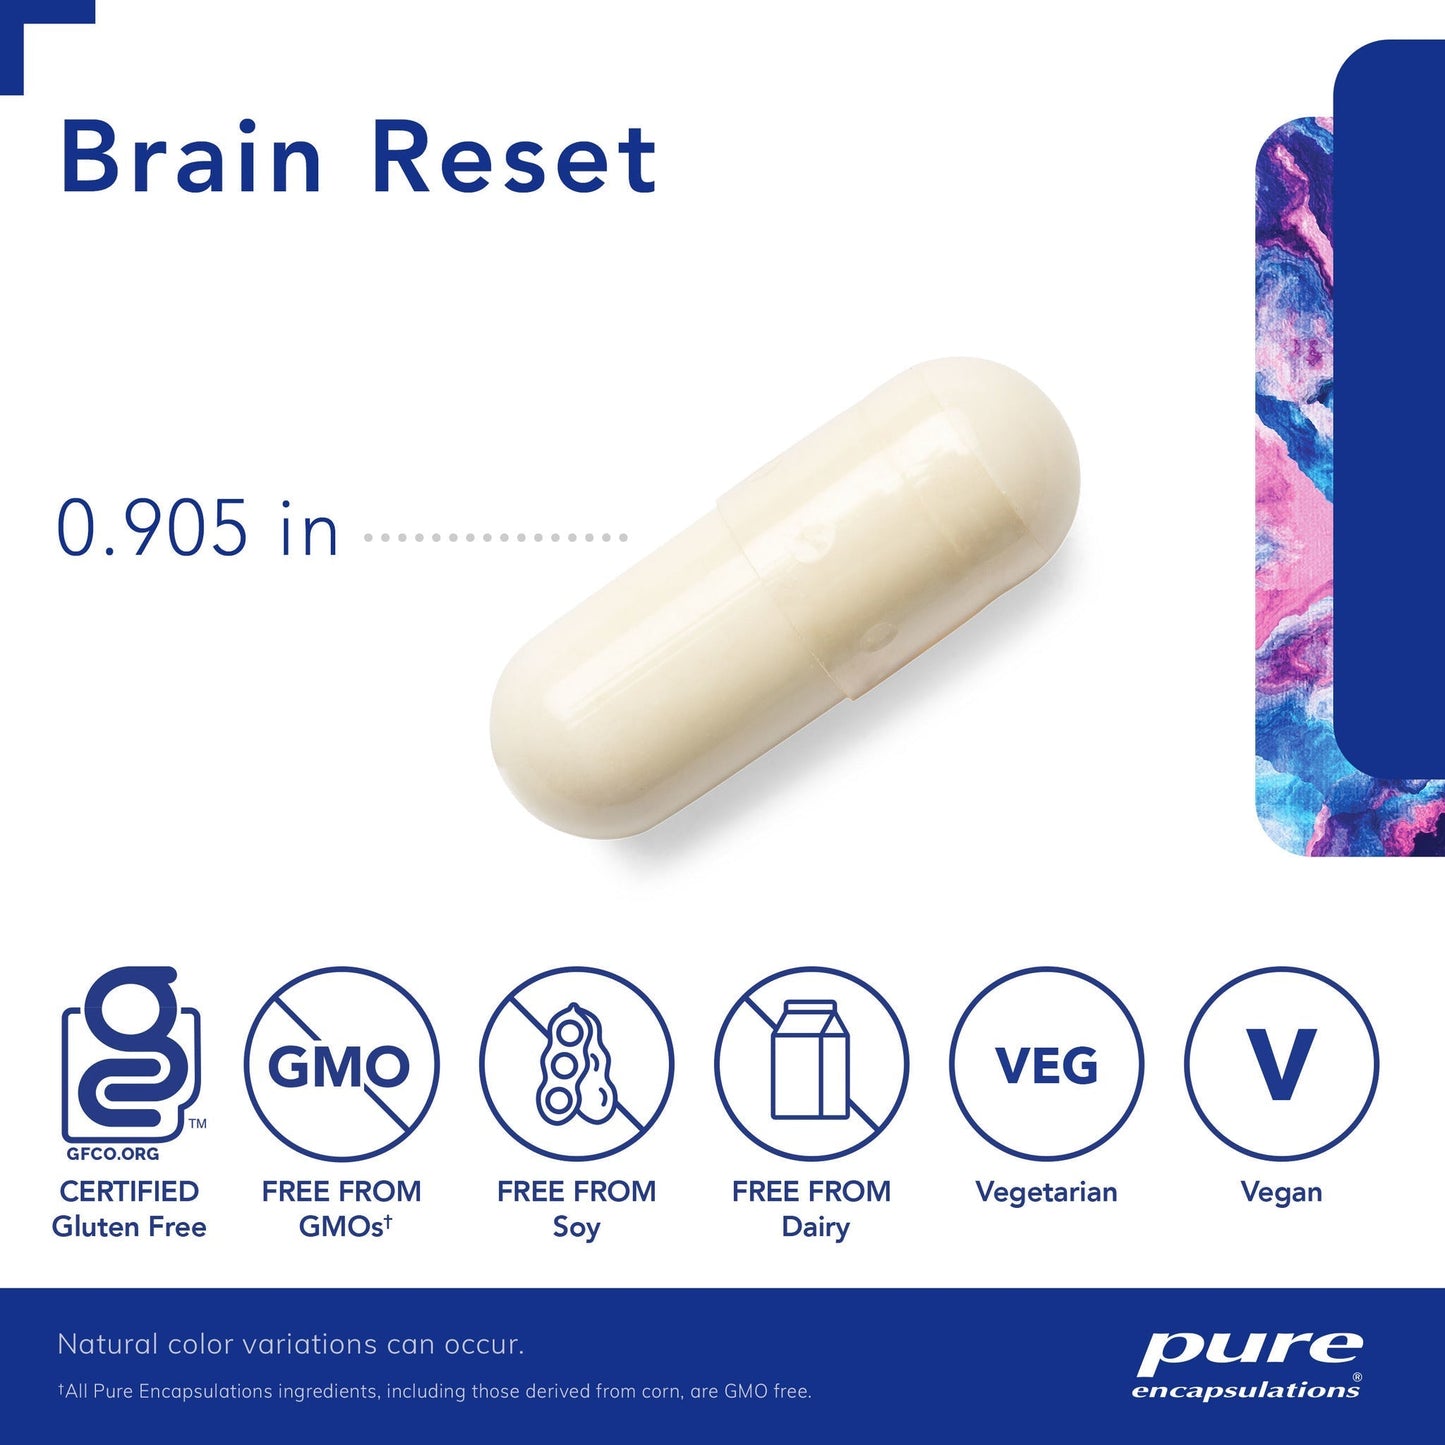 Brain Reset